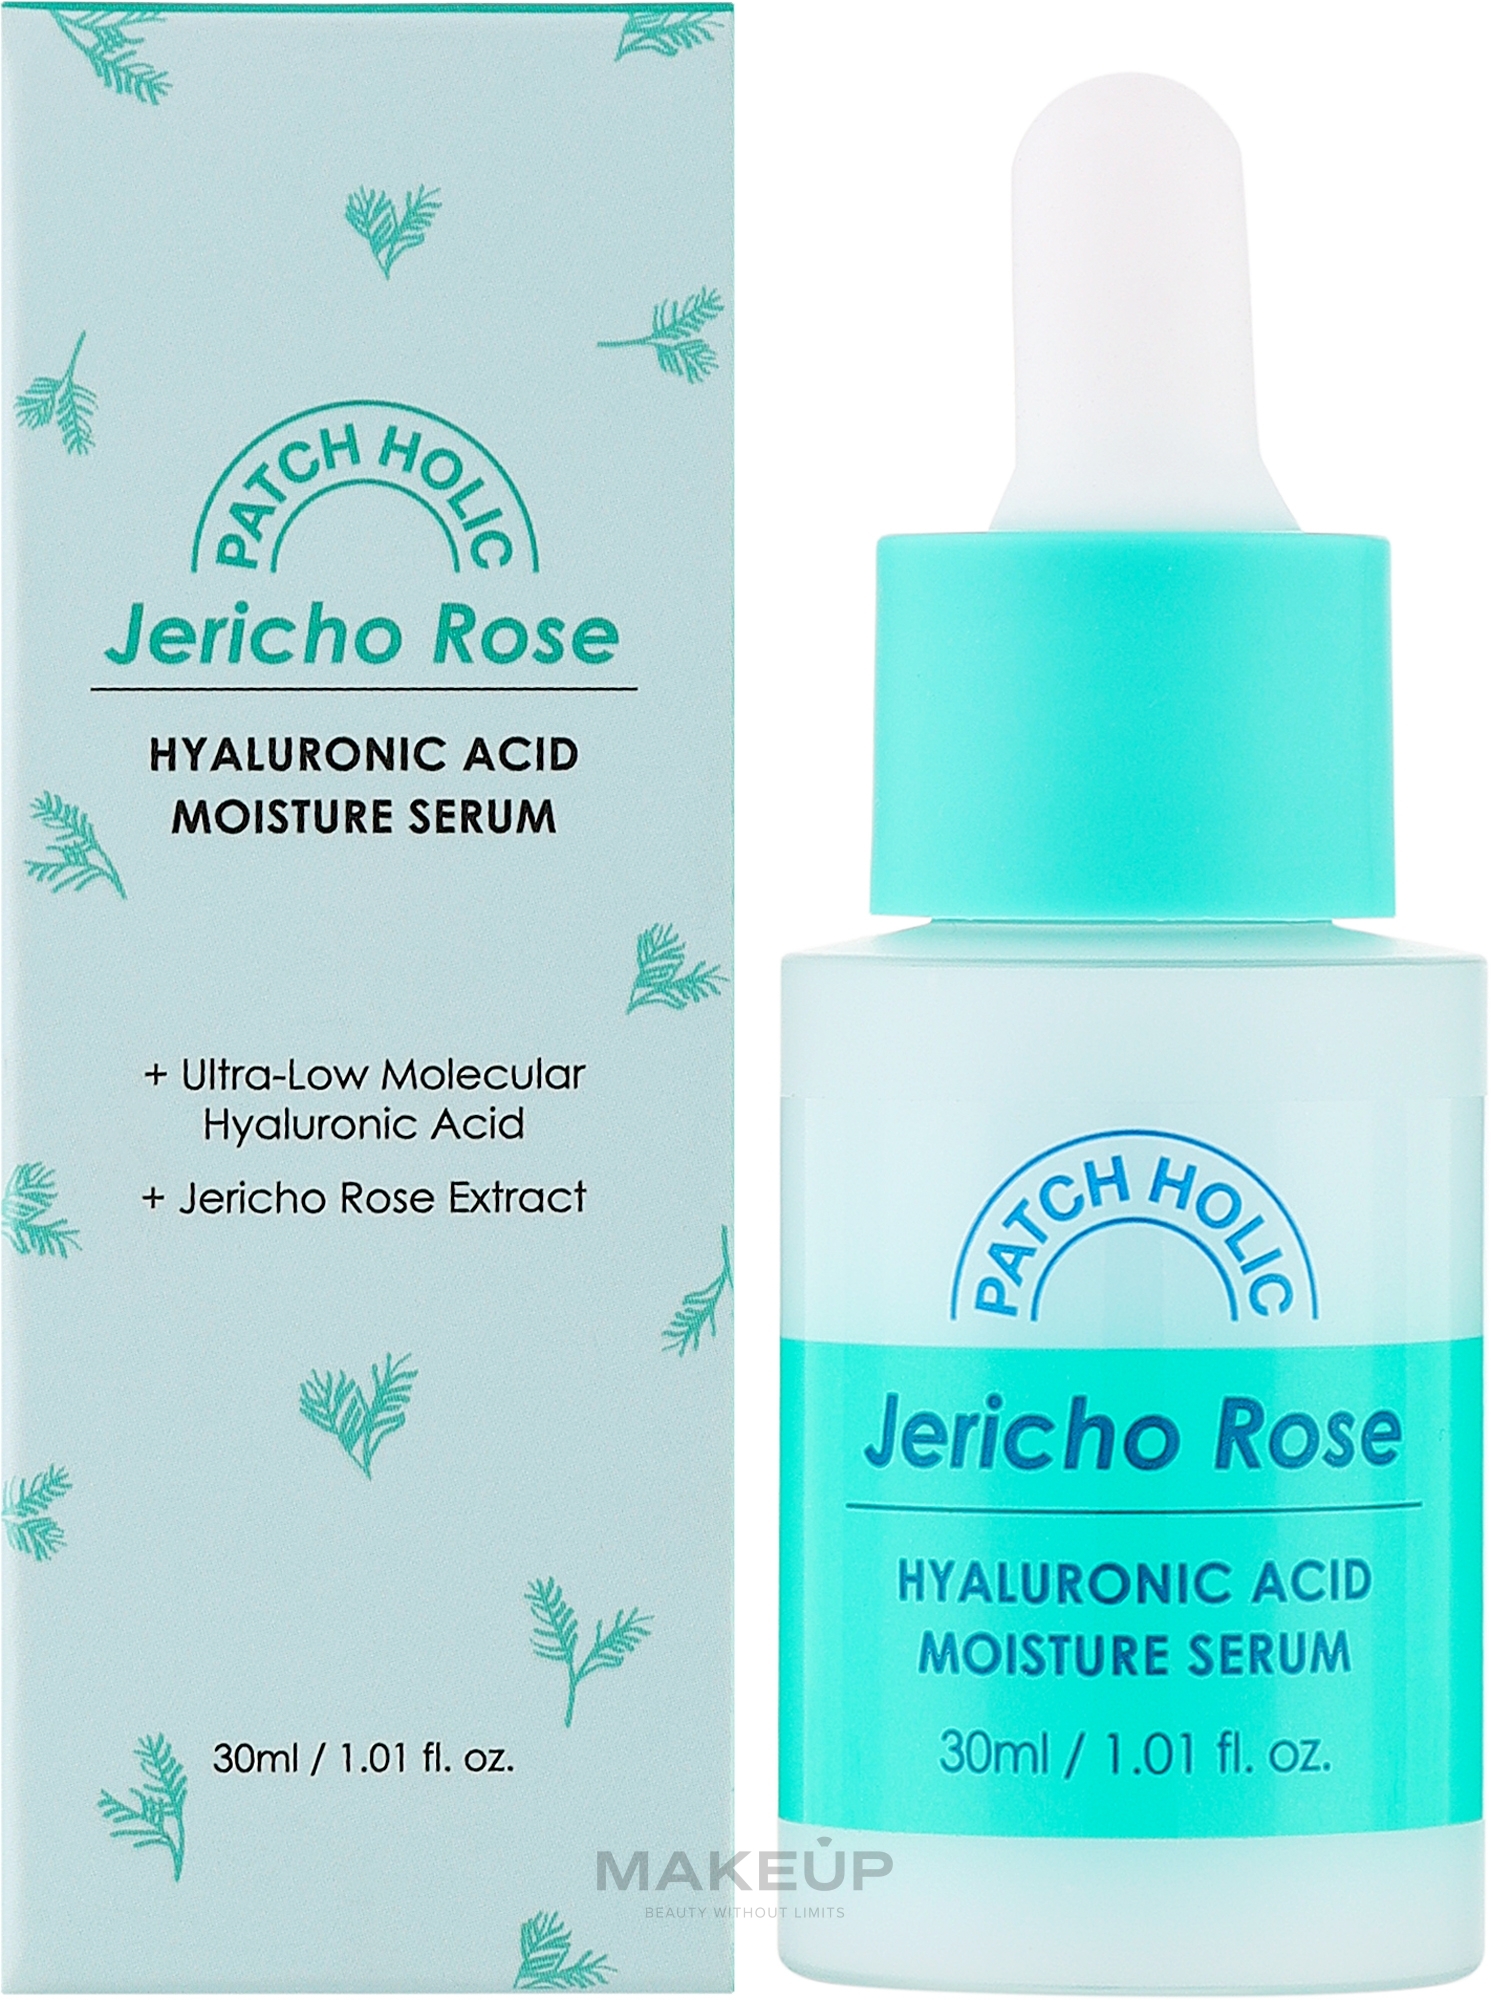 Зволожувальна сироватка для обличчя - Patch Holic Jerico Rose Hyaluronic Acid Moisture Serum — фото 30ml